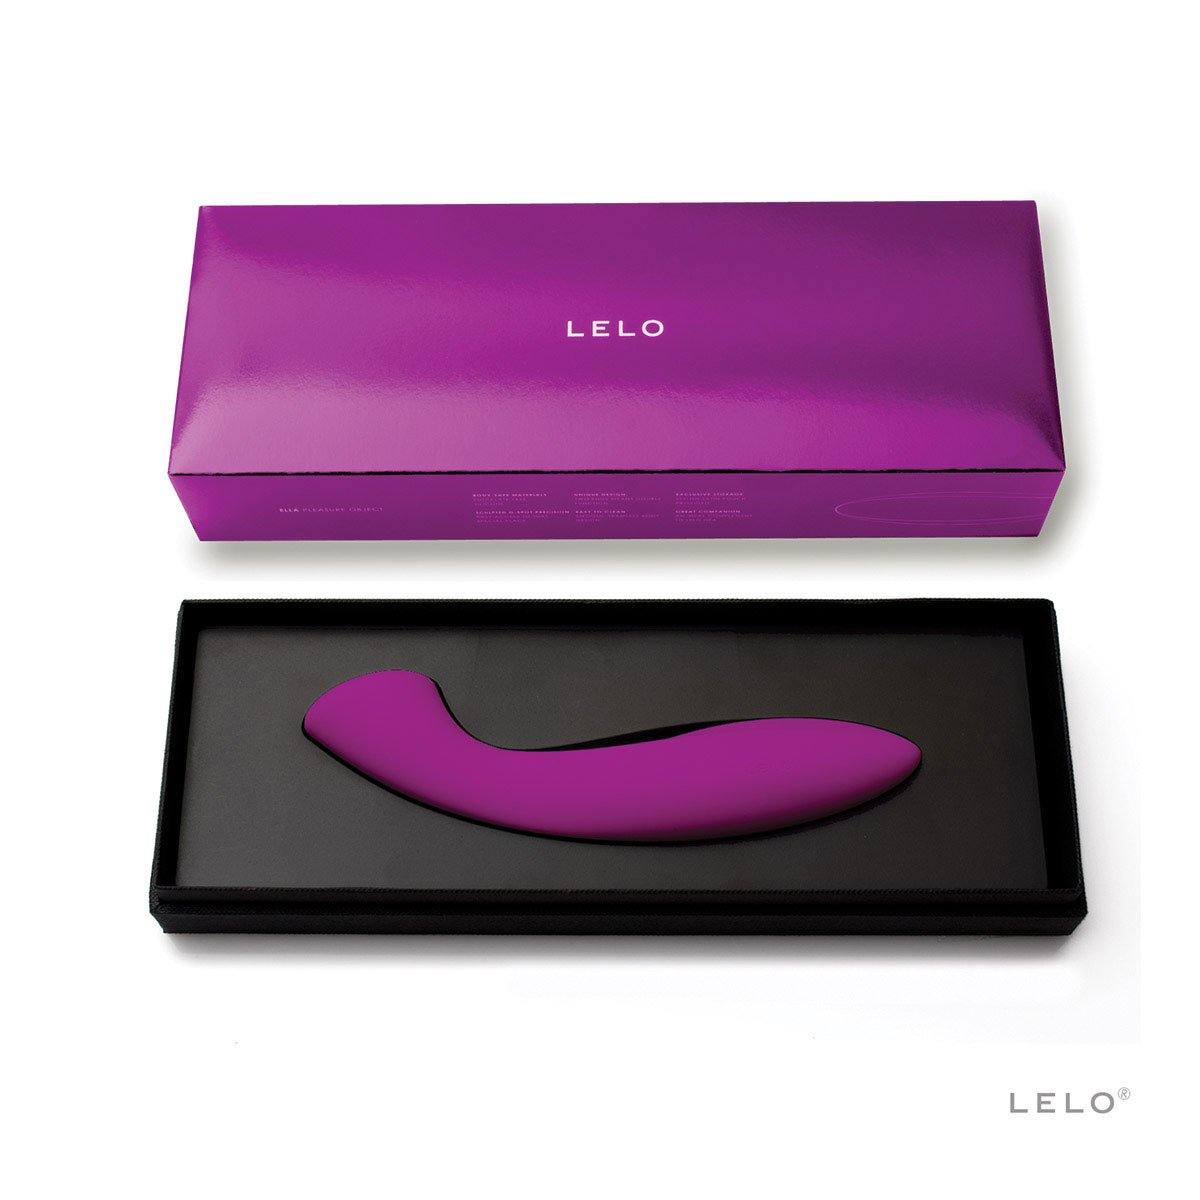 Lelo Ella - Buy At Luxury Toy X - Free 3-Day Shipping